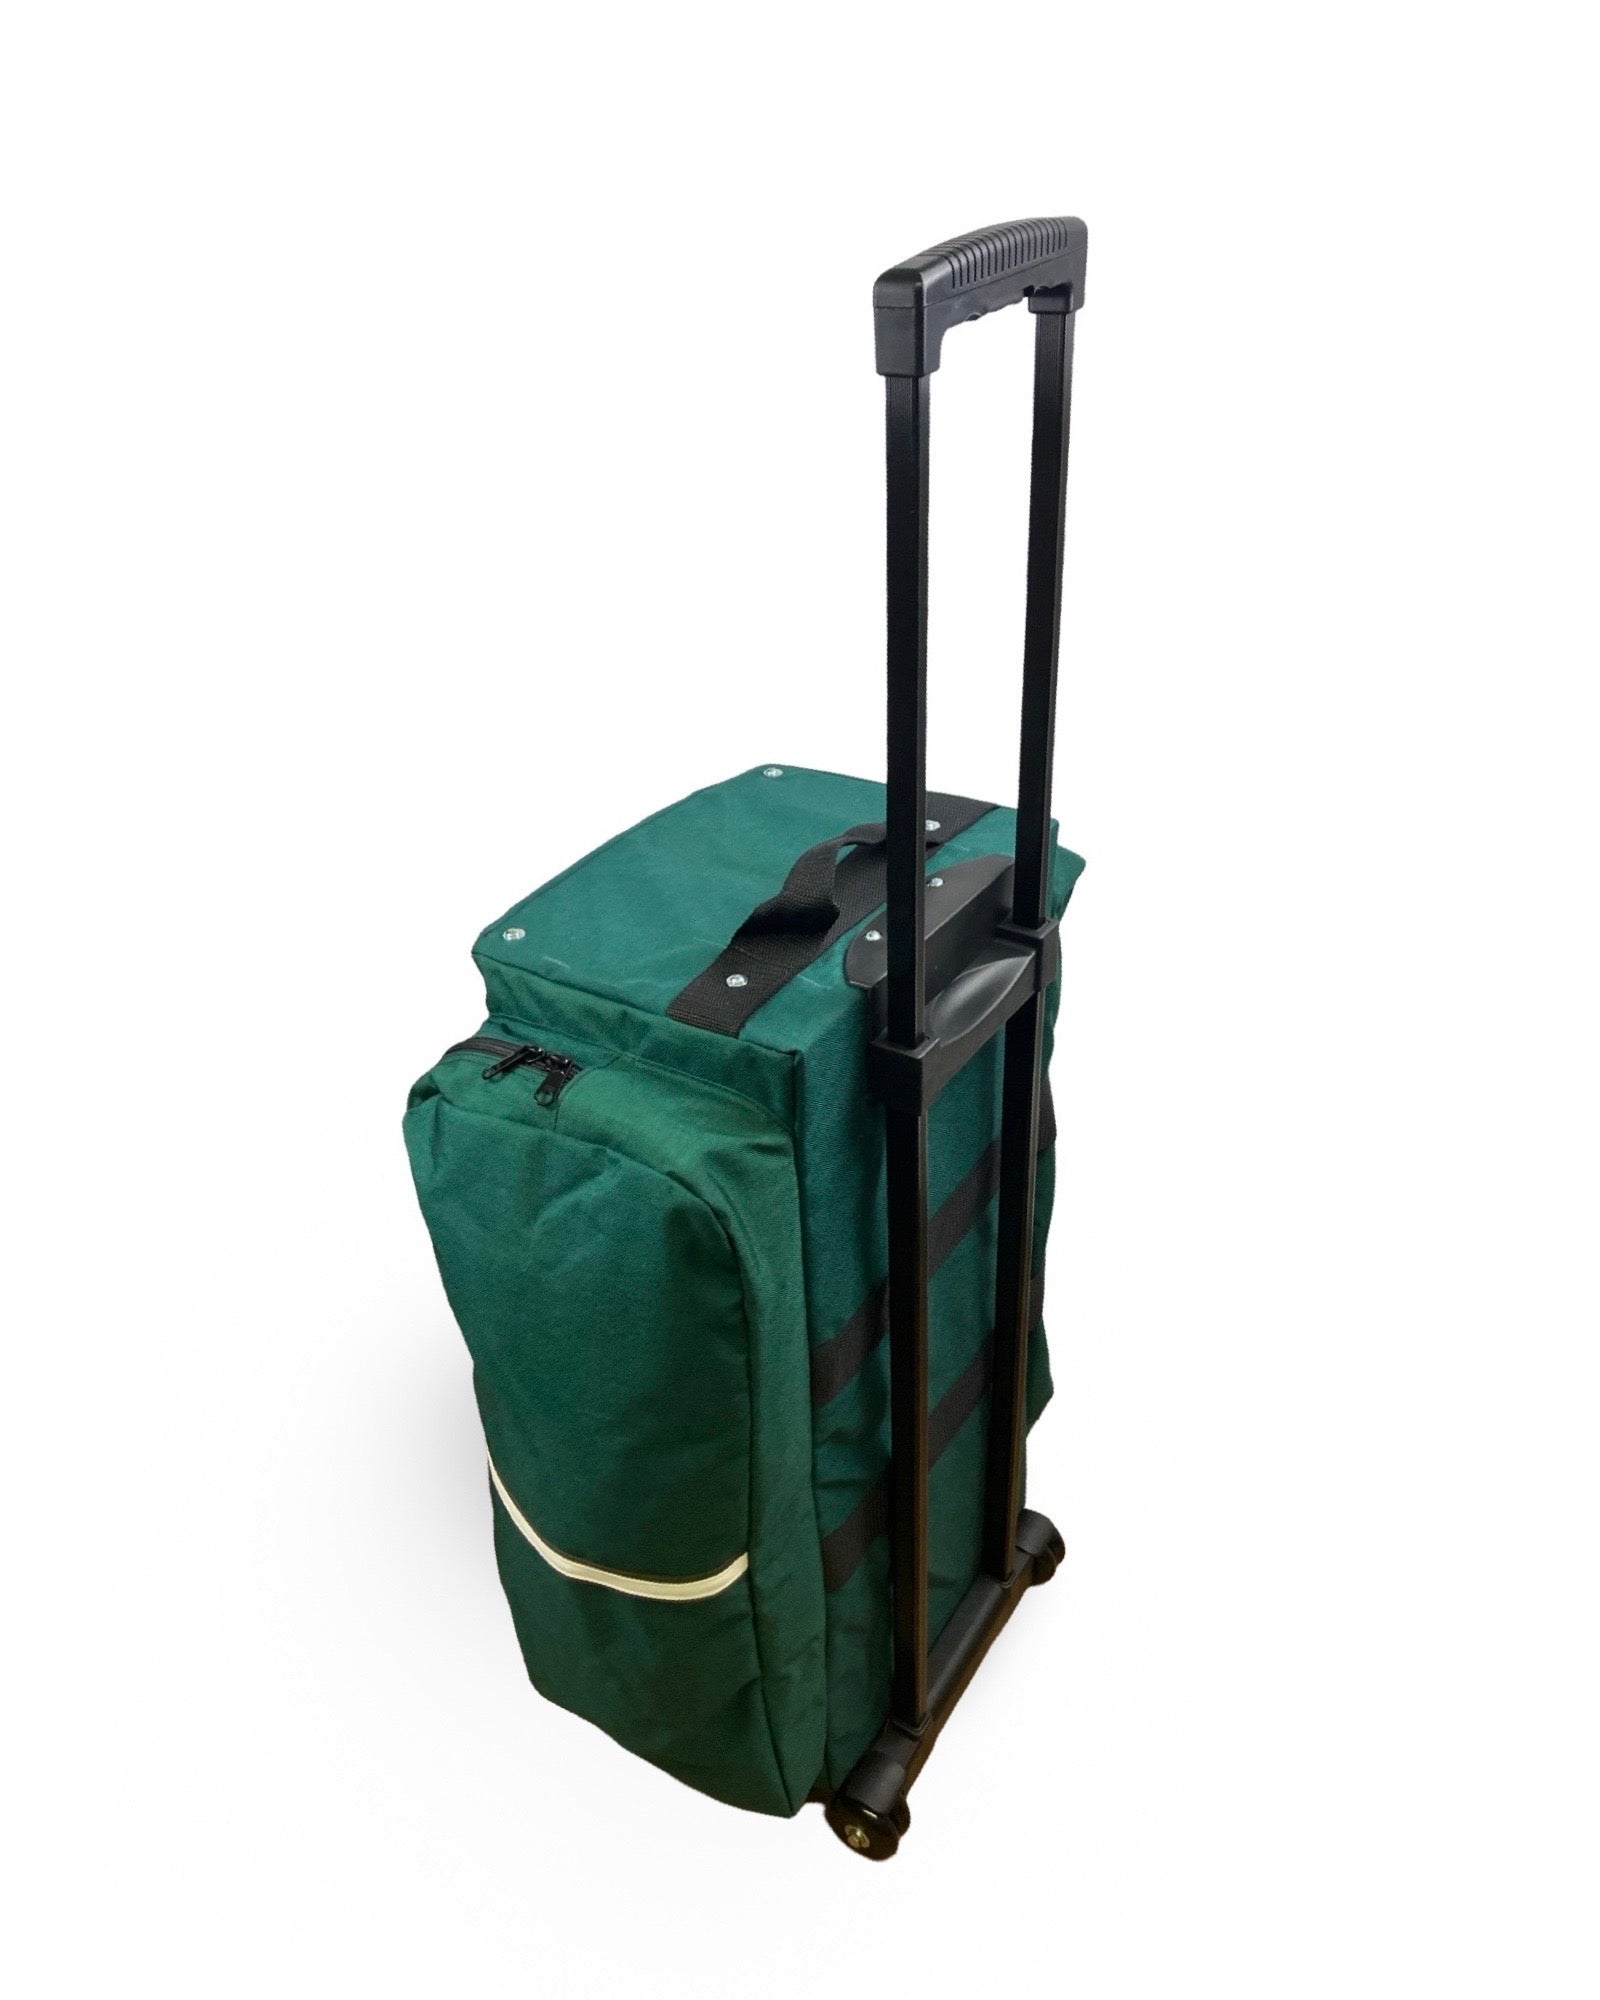 SAMOYED Wheeled Suitcase Luggage, by Tough Traveler. Made in USA since 1970